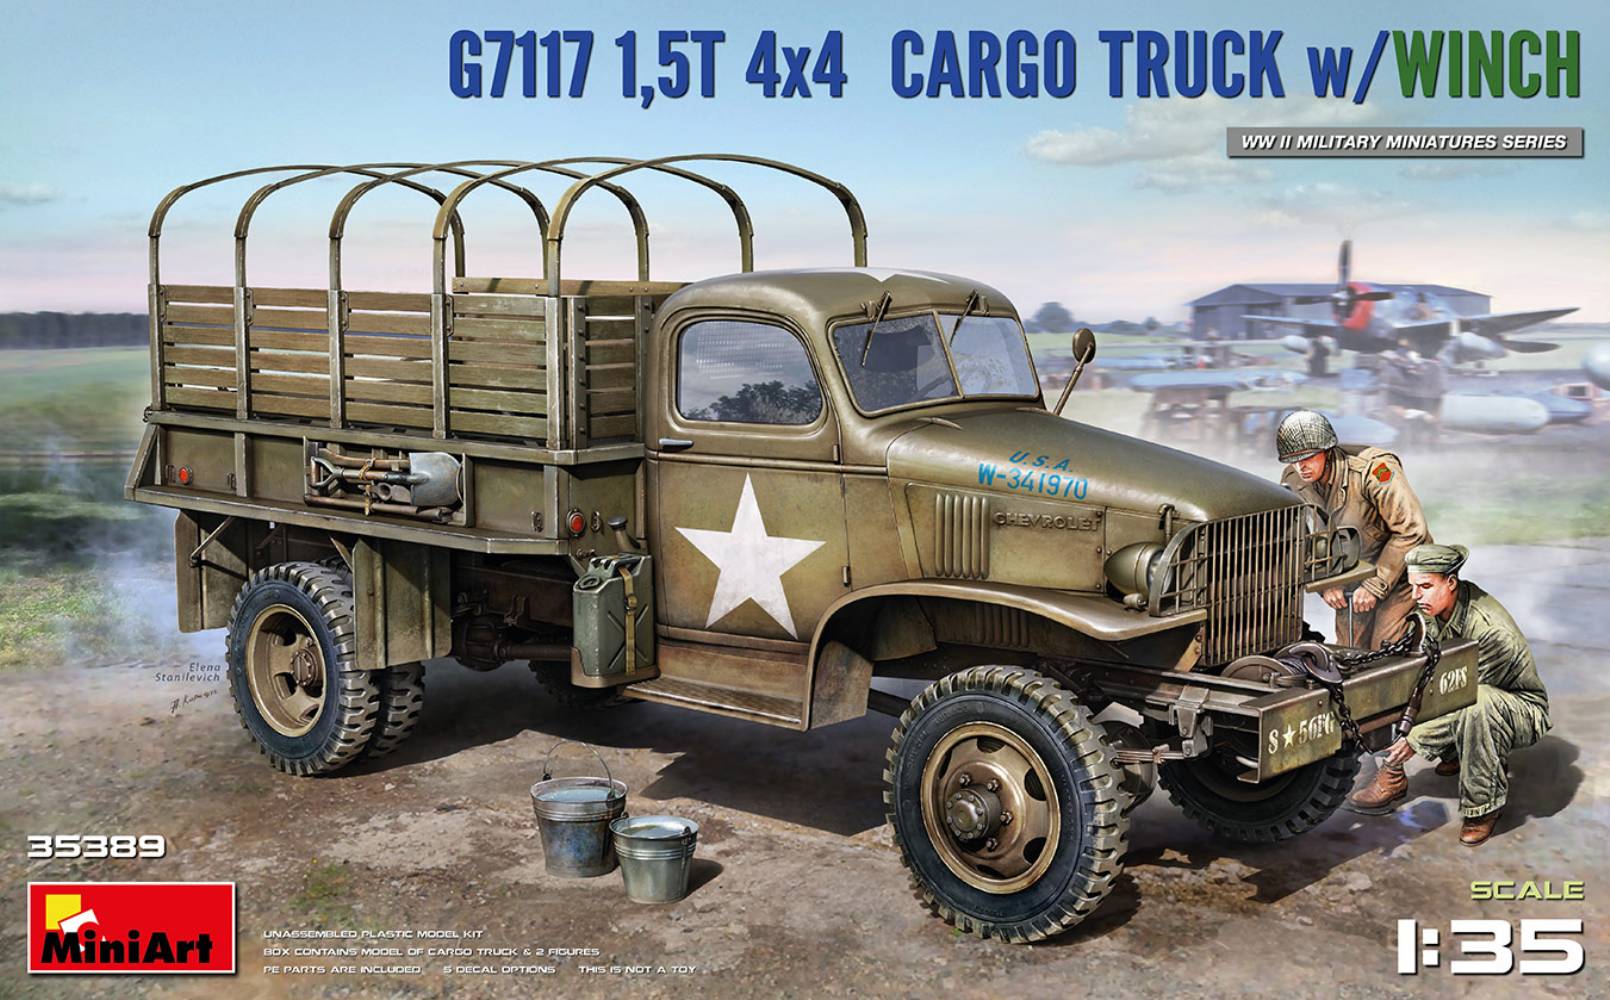 1/35 1,5t 4x4 G7117 Cargo Truck w/Winch - Miniart